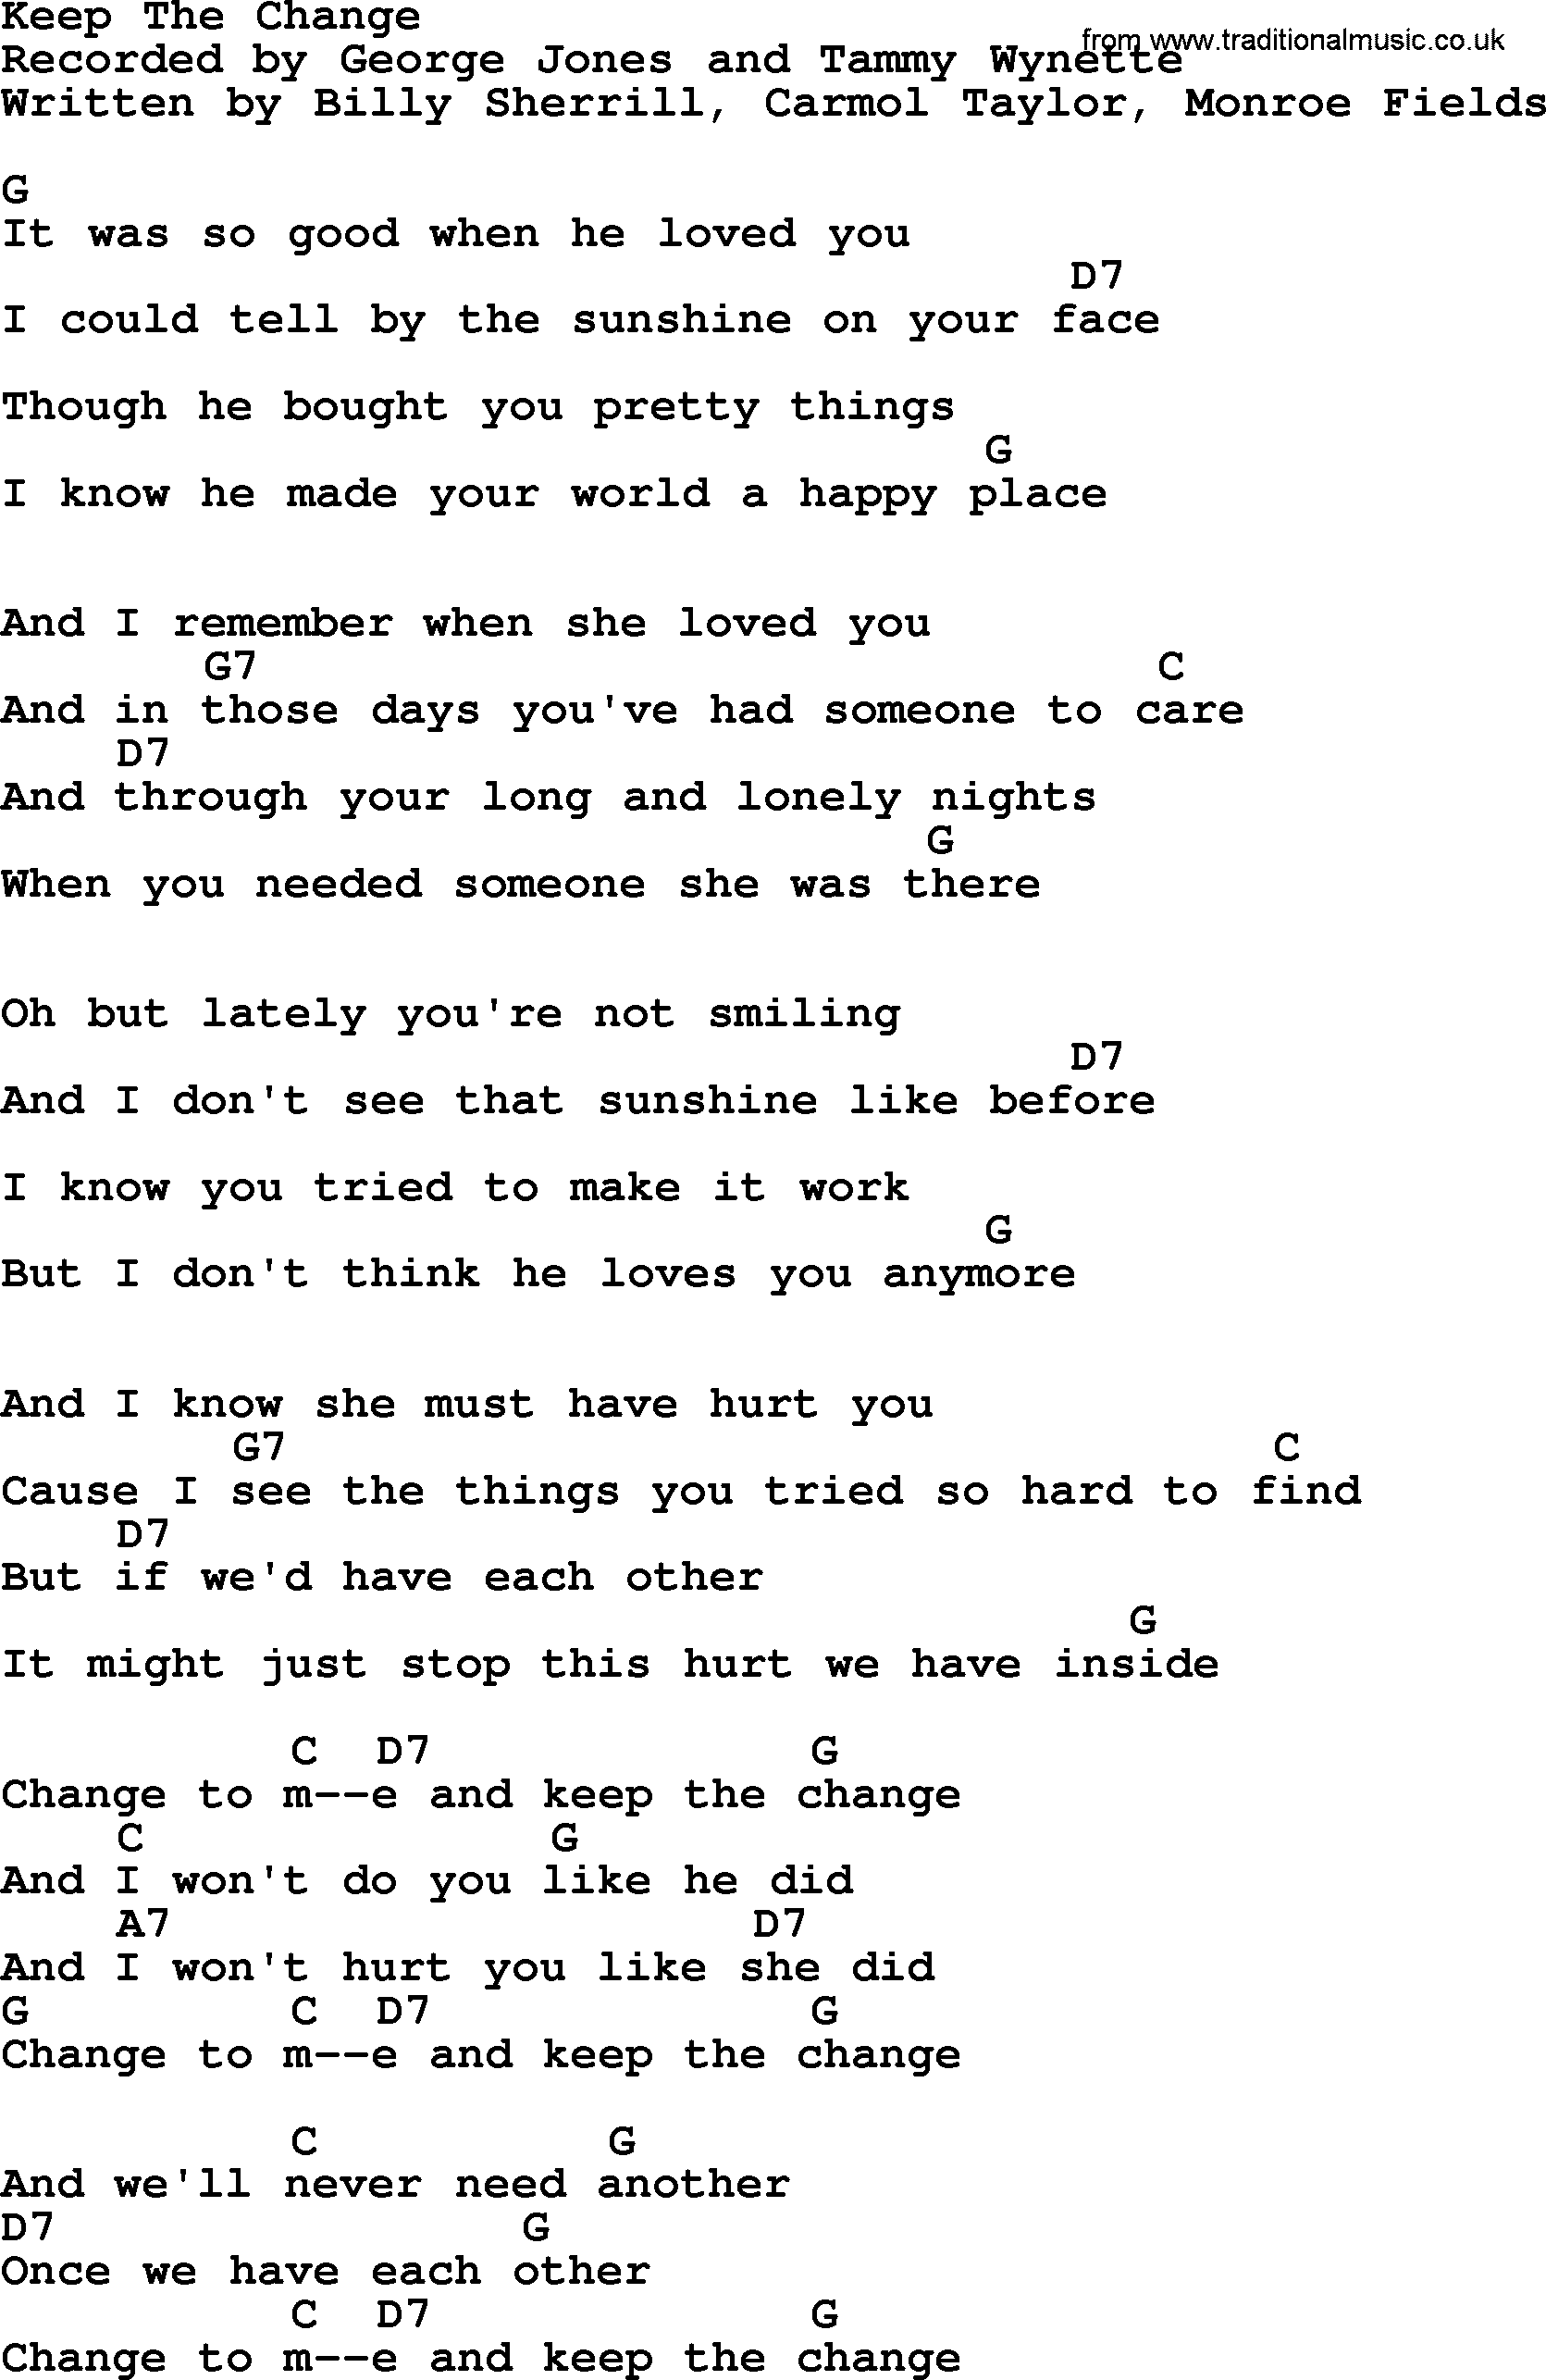 George Jones song: Keep The Change, lyrics and chords